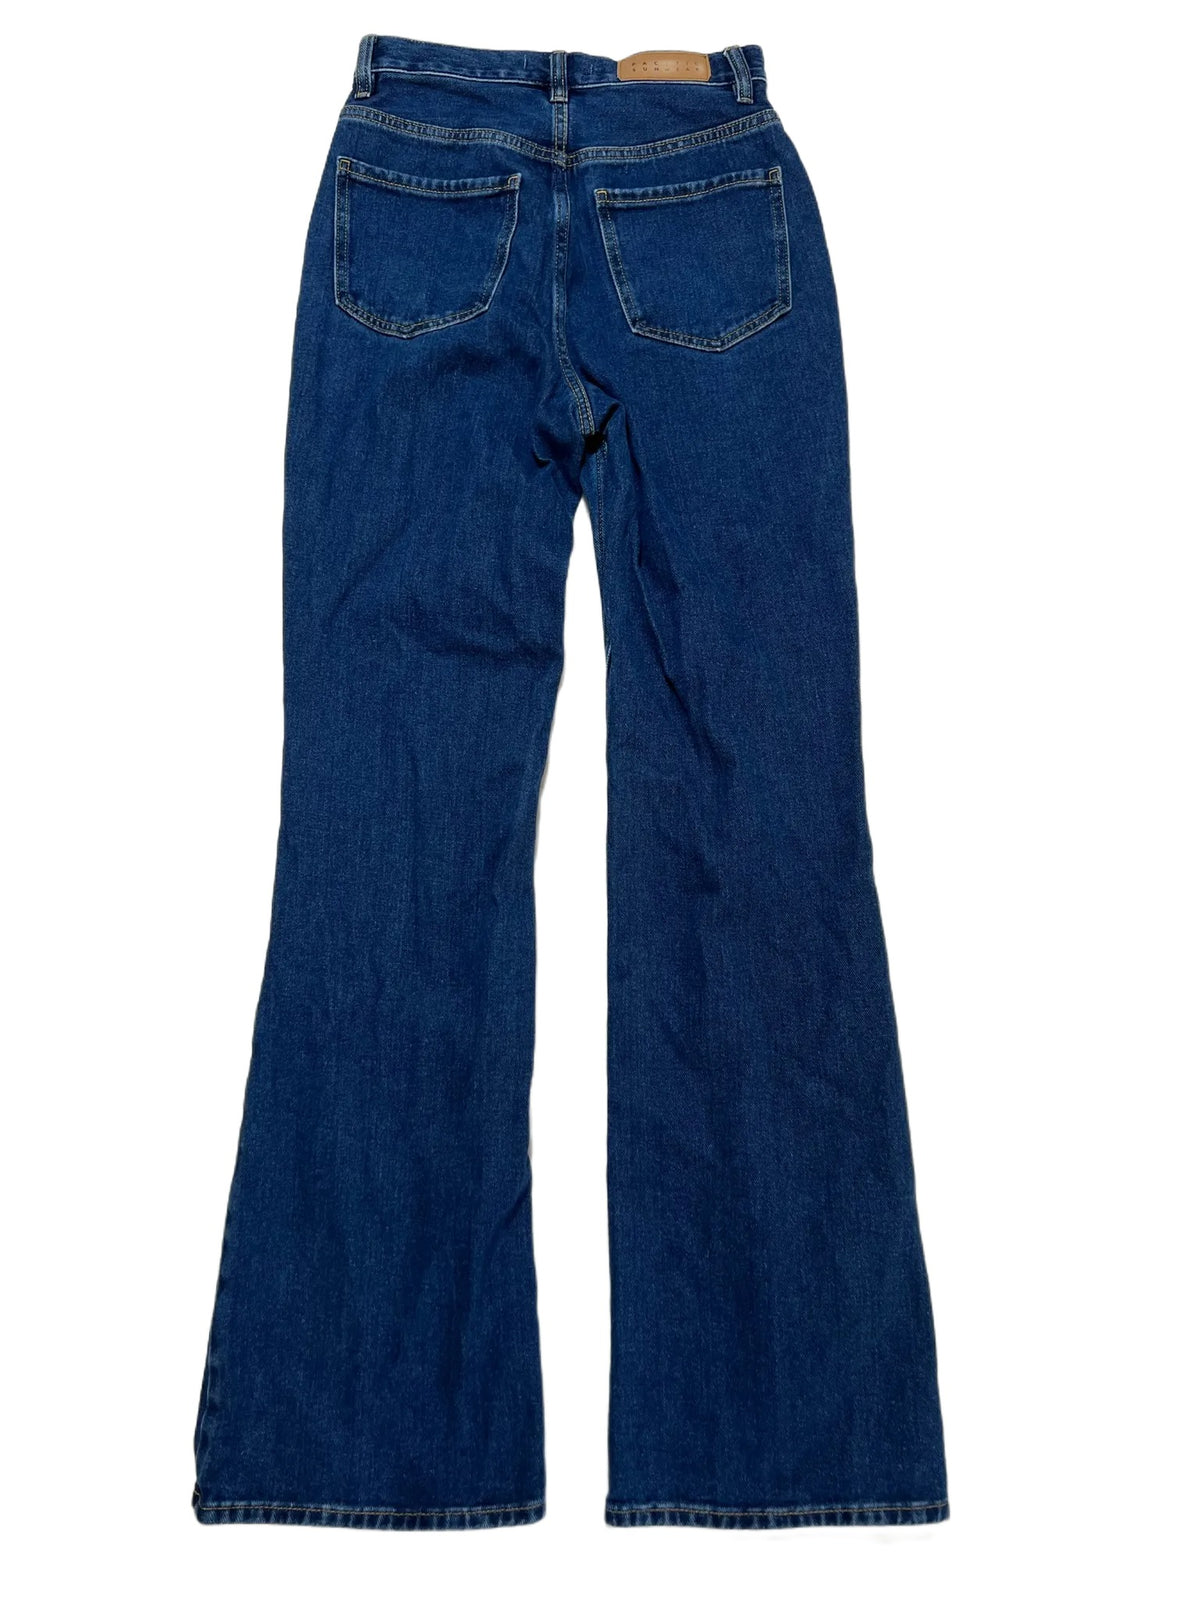 Pacsun- Dark Wash Flare Jeans